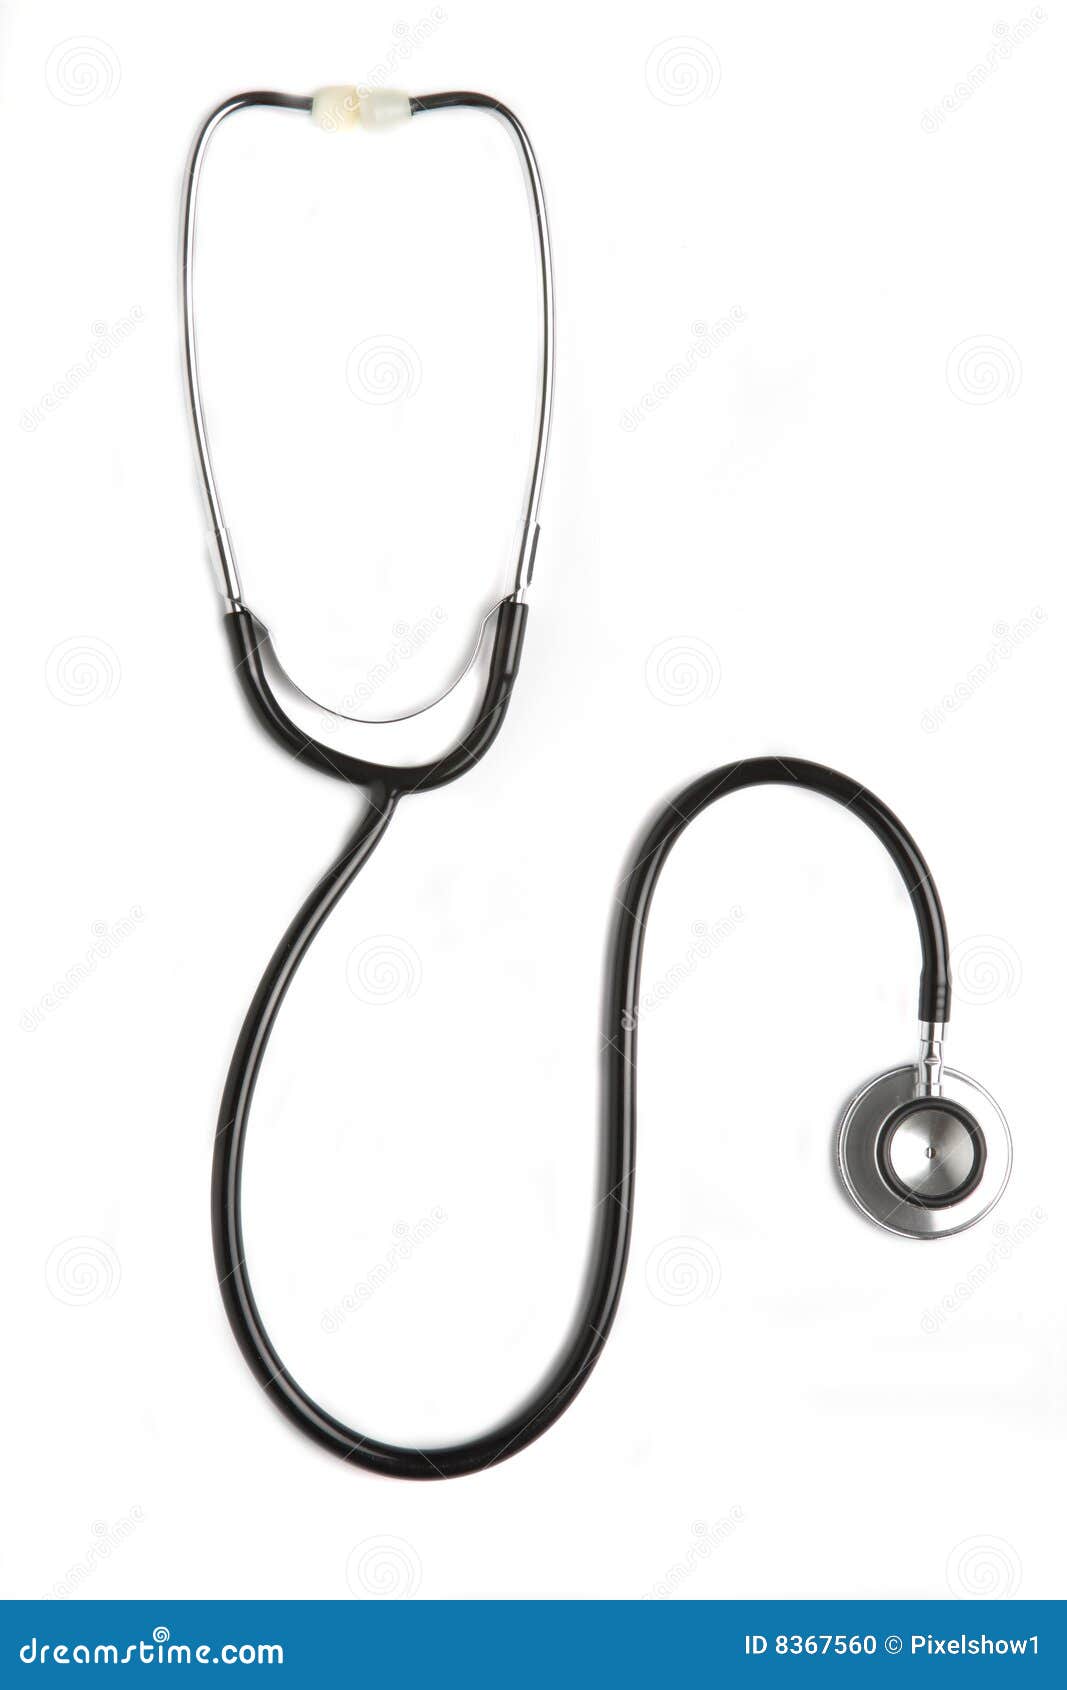 Stethoscope stock photo. Image of professional, physician - 8367560